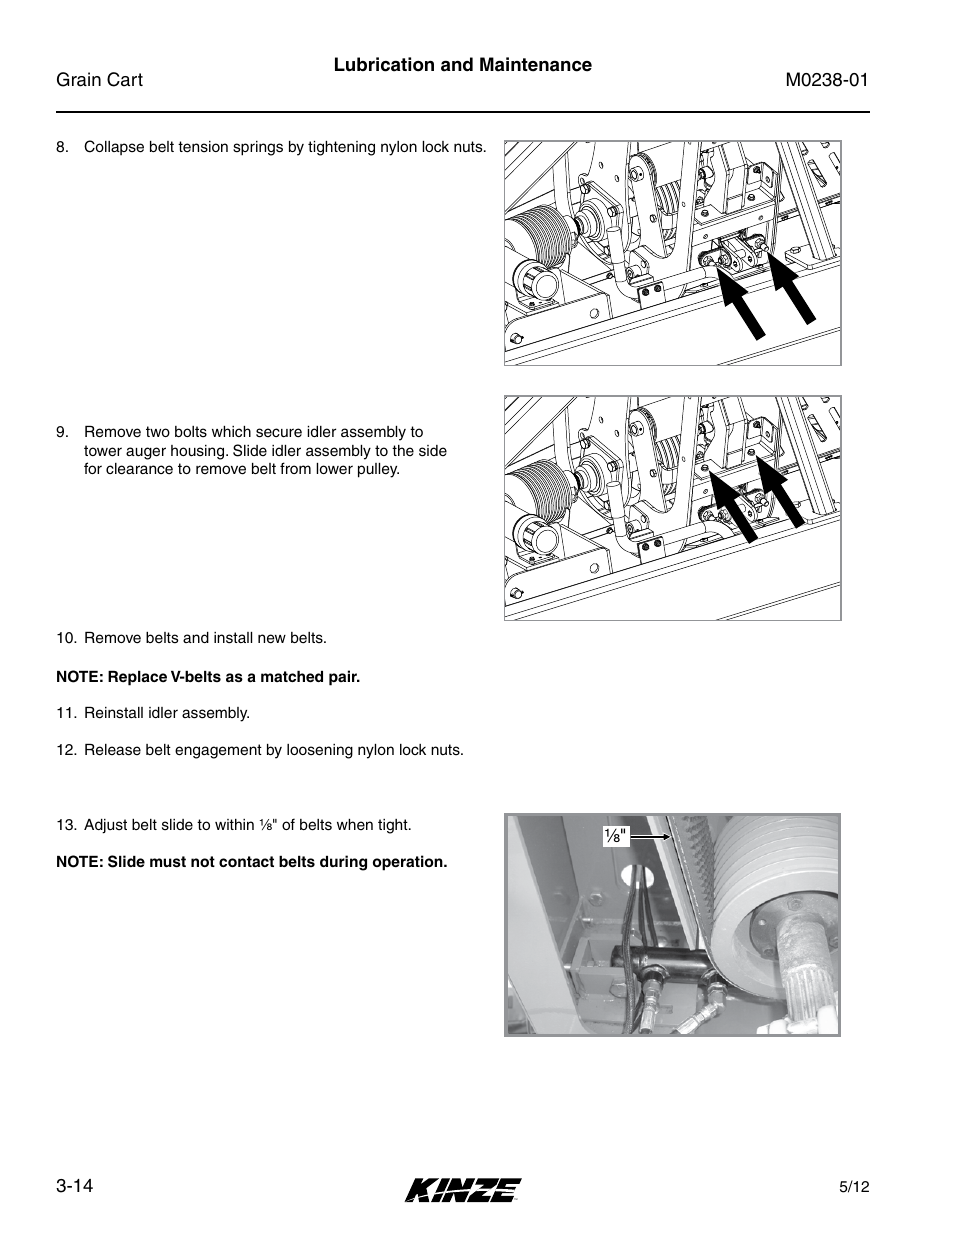 Kinze Grain Carts Rev. 7/14 User Manual | Page 50 / 70